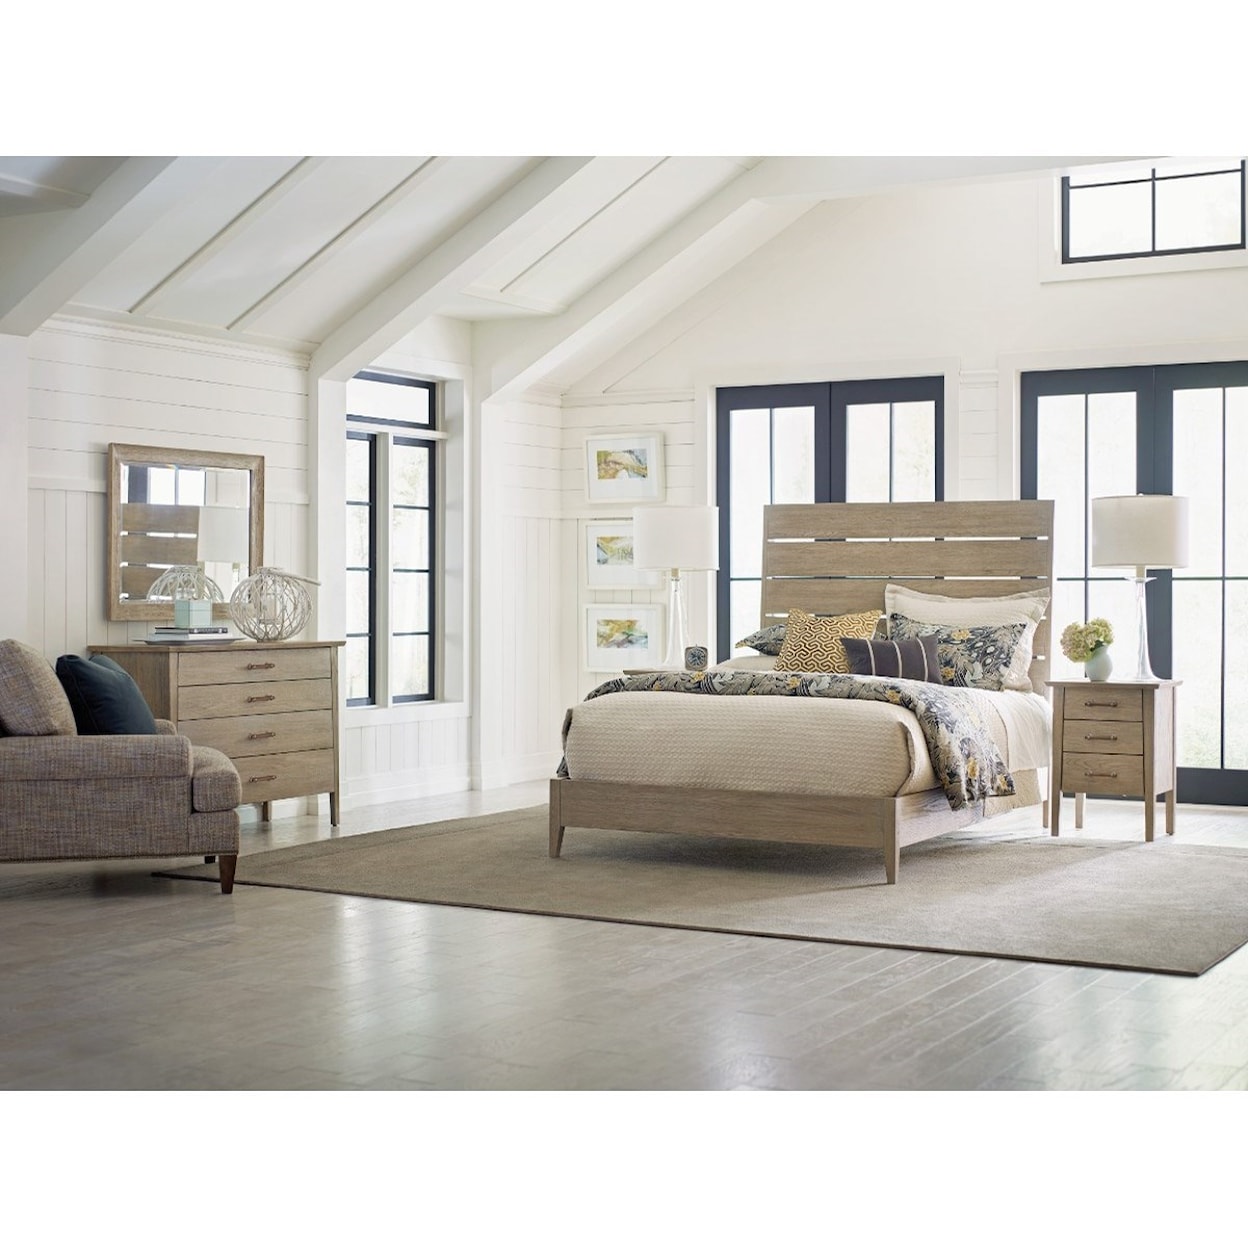 Kincaid Furniture Symmetry King Bedroom Group